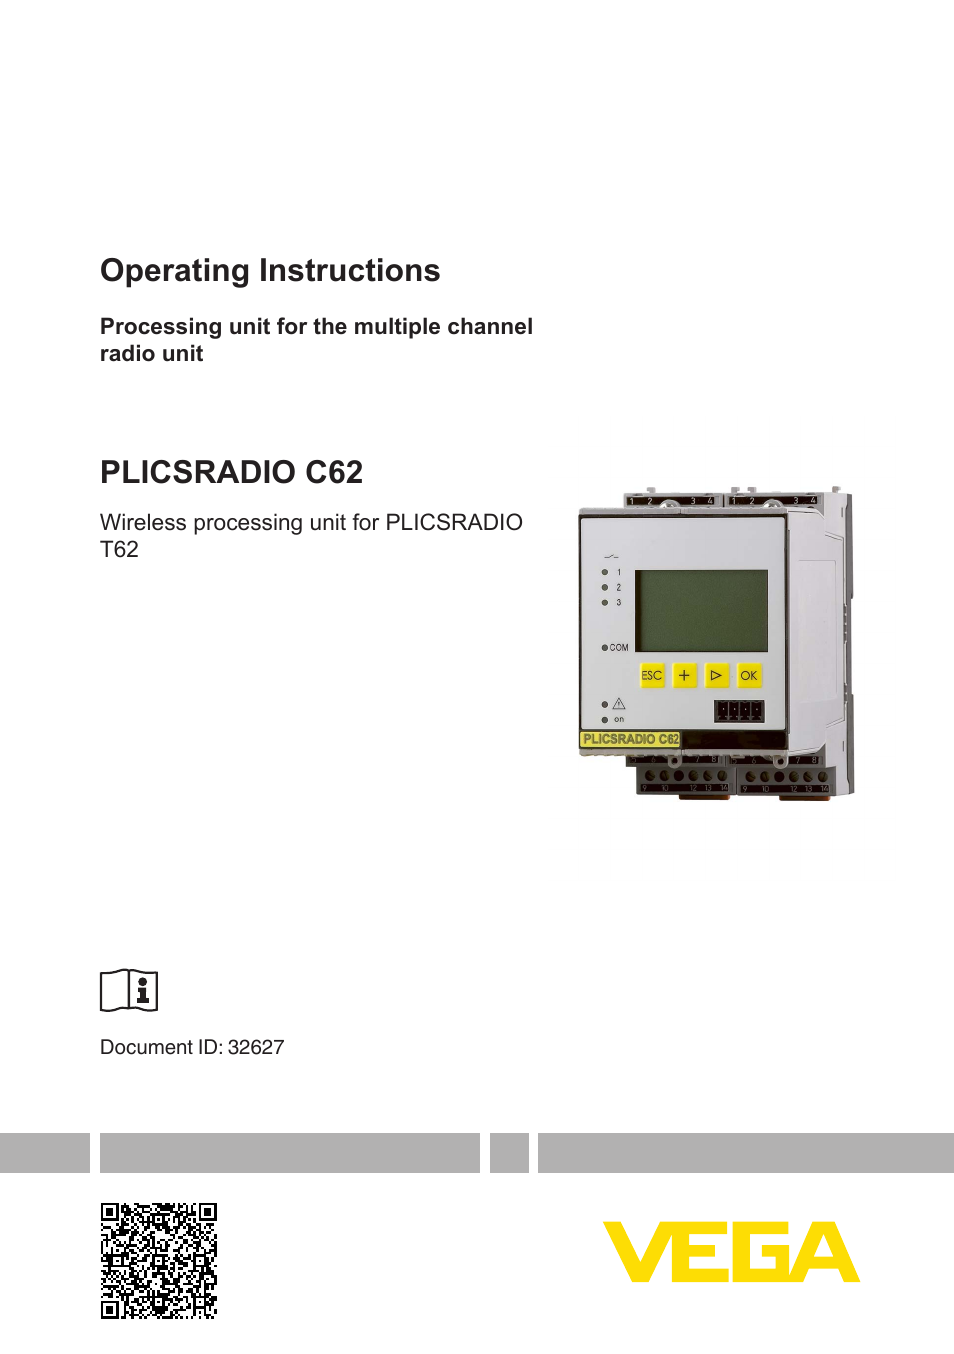 PLICSRADIO R62 Wireless processing unit